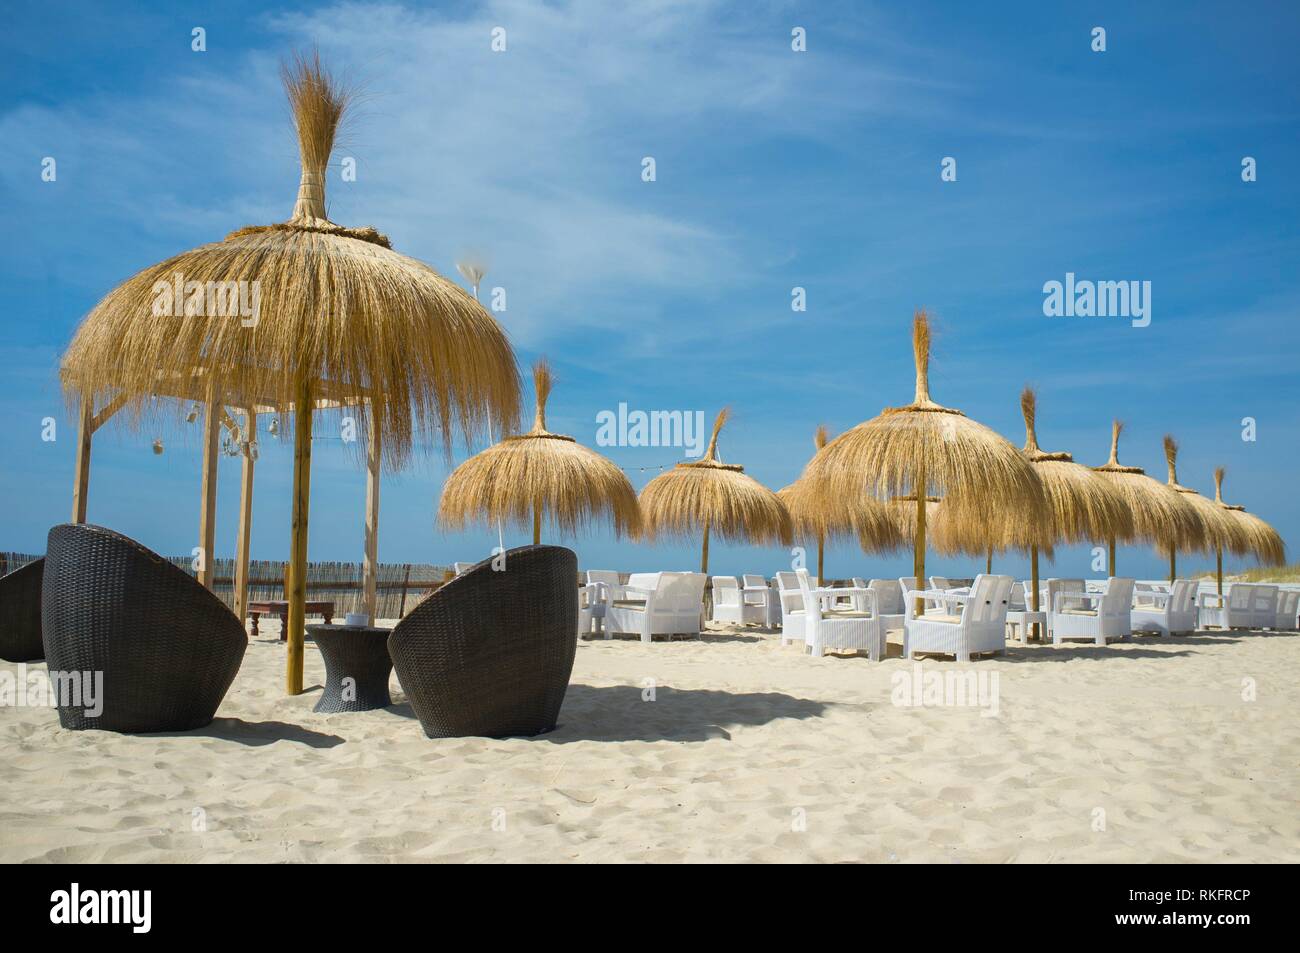 Costa de la luz restaurant hi-res stock photography and images - Alamy